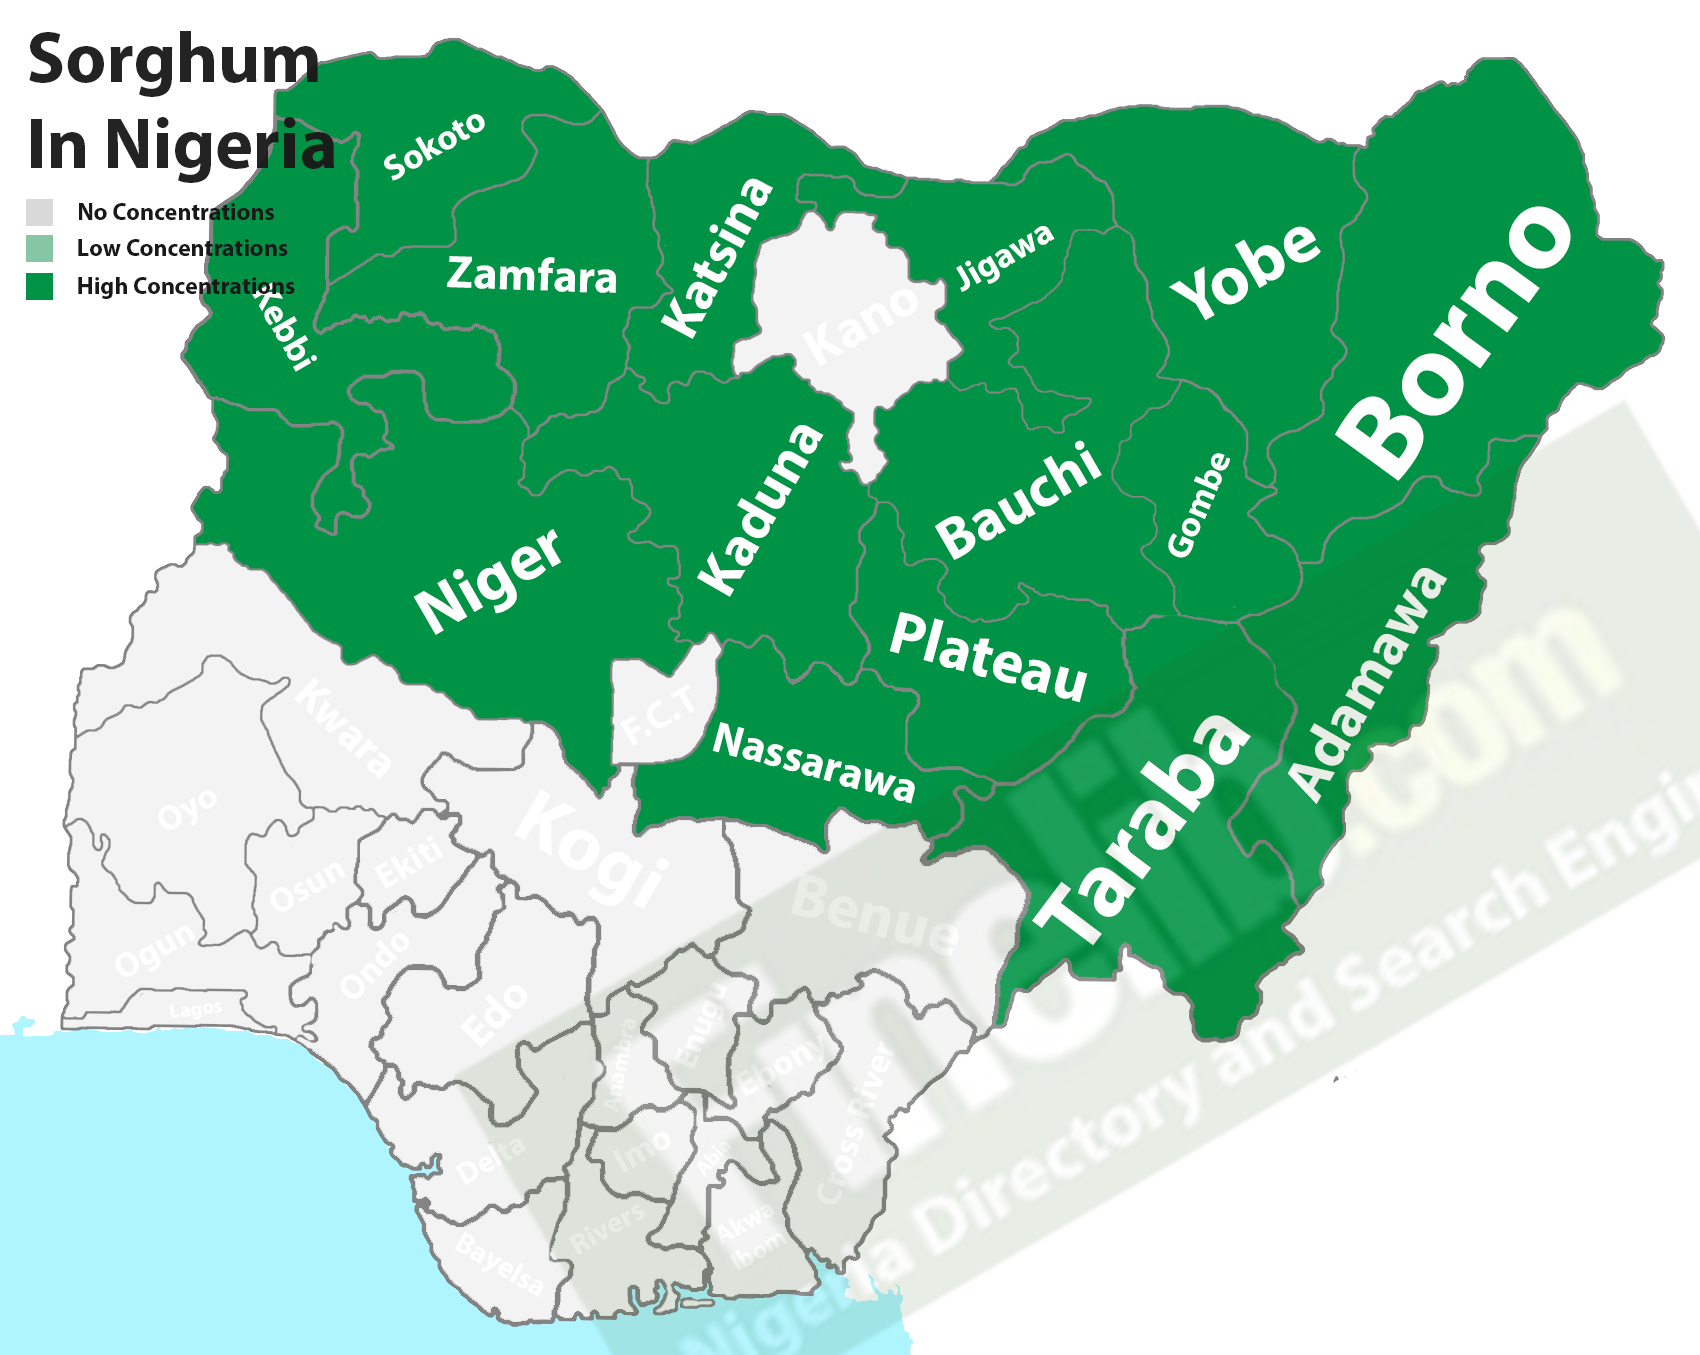 Sorghum cash crops in Nigeria